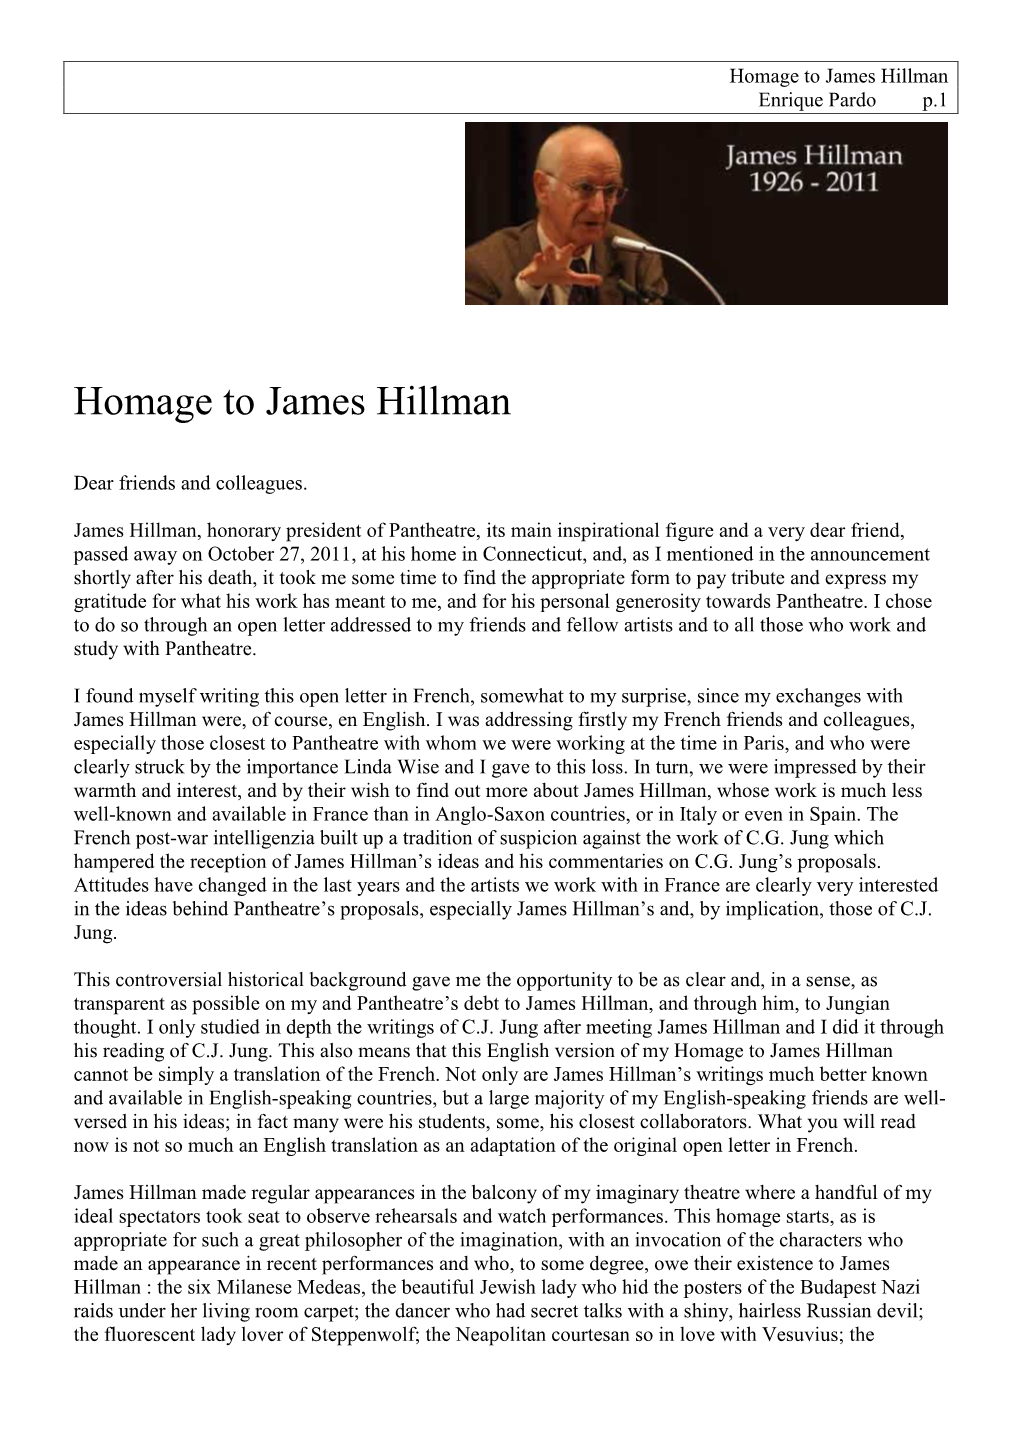 Homage to James Hillman Enrique Pardo P.1